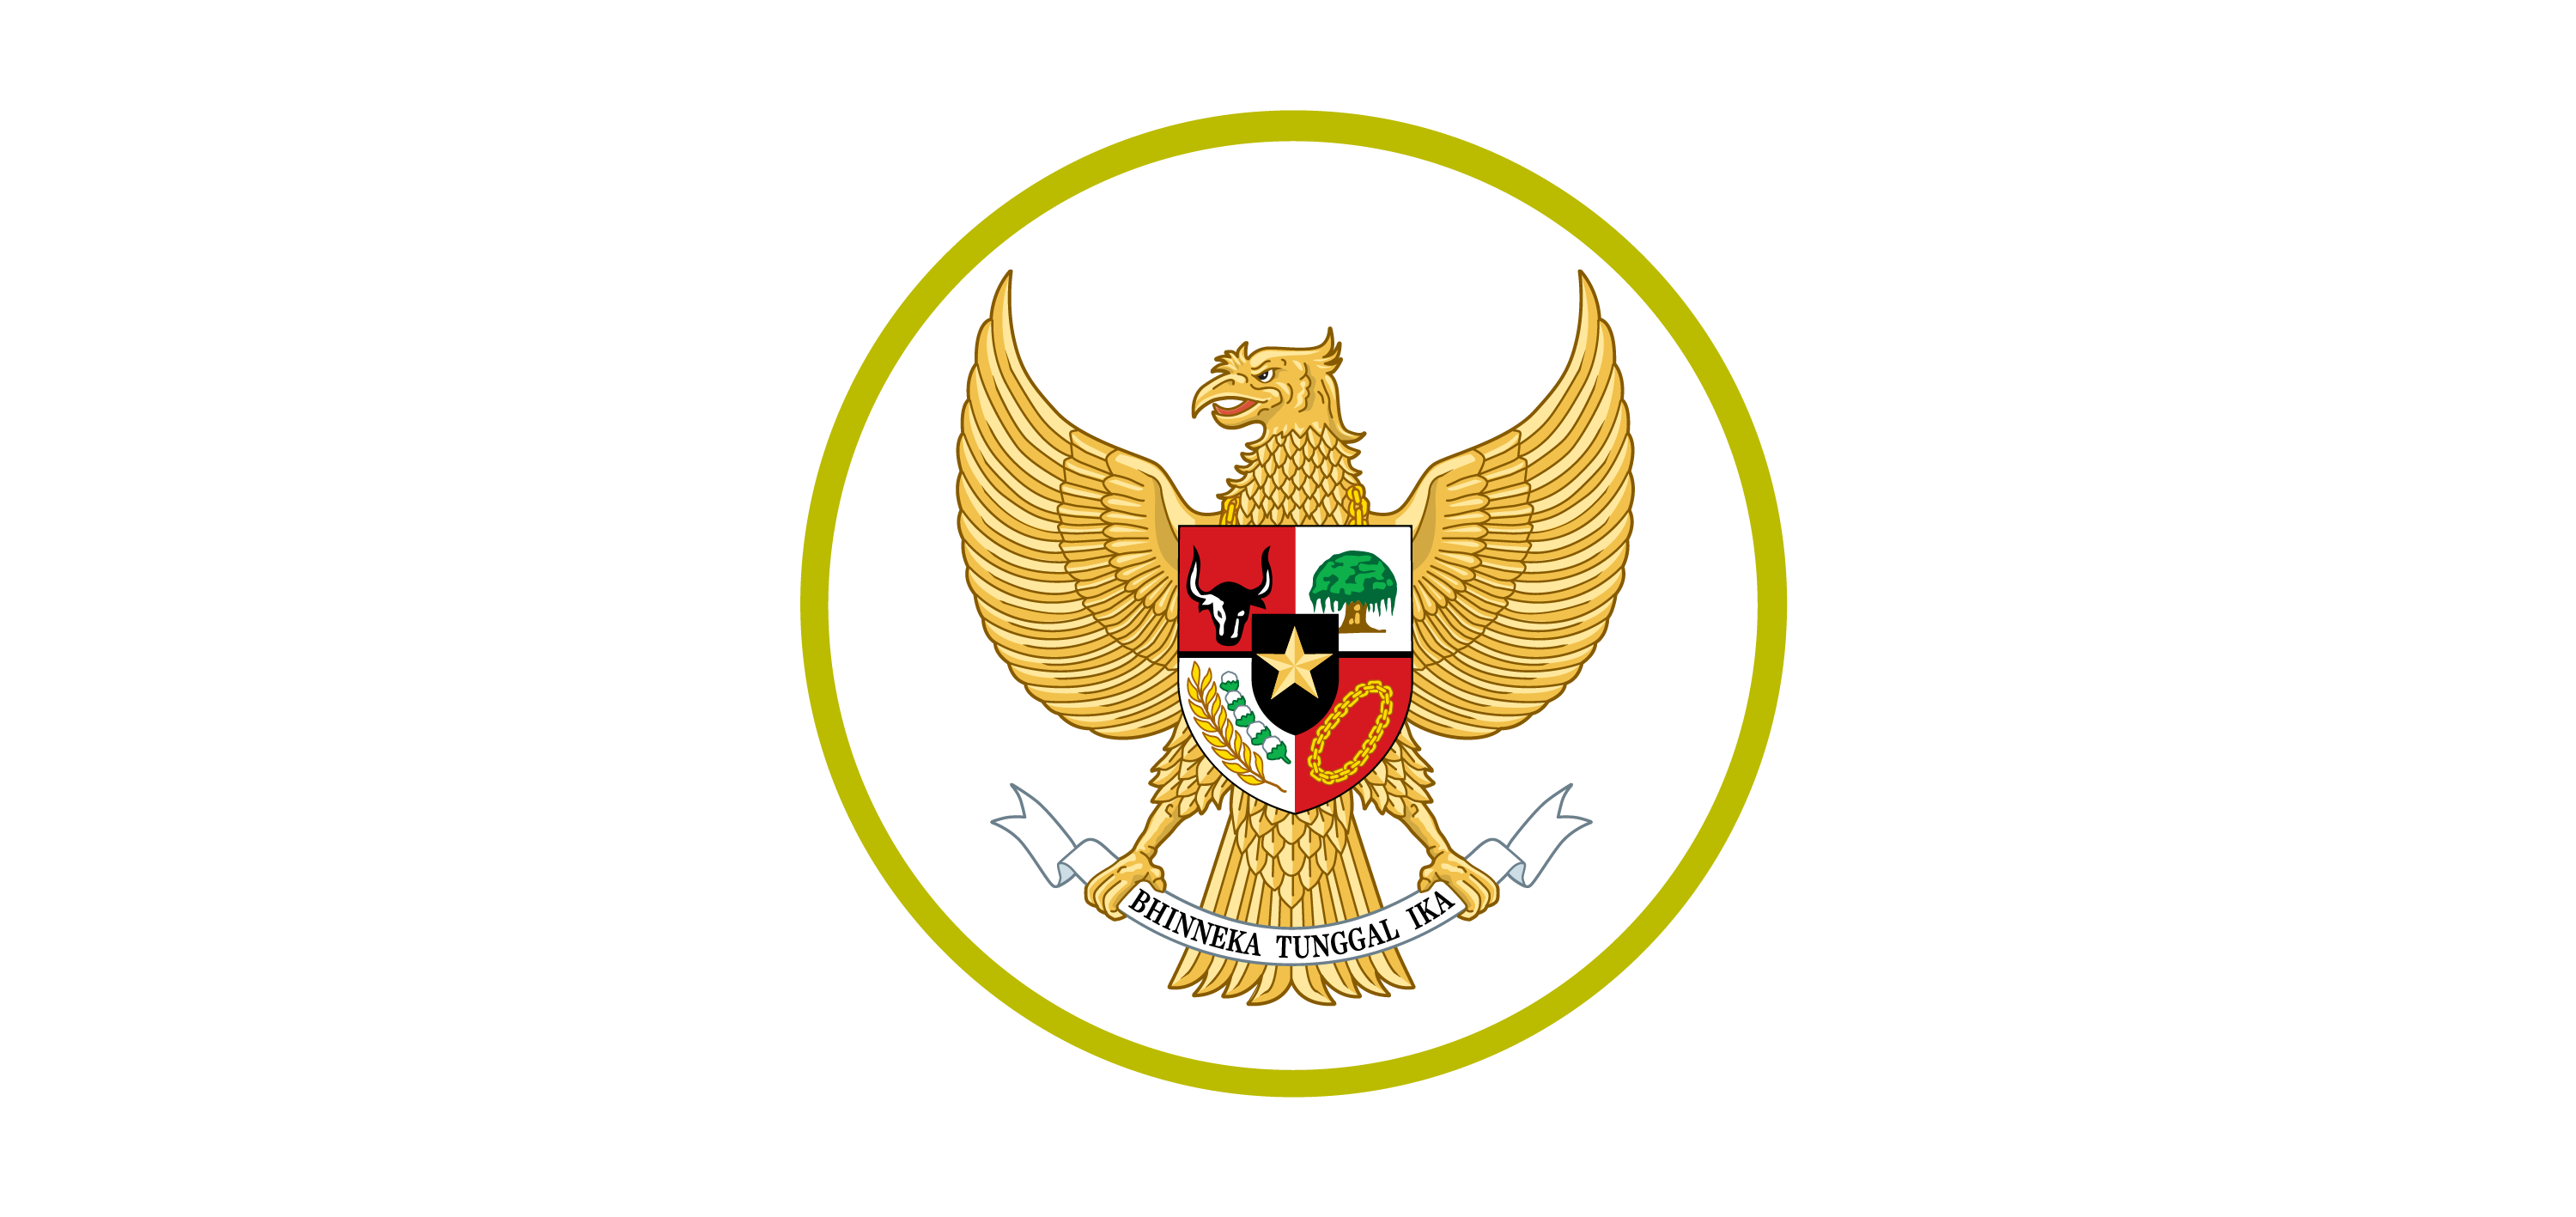 Indonesia football team logo